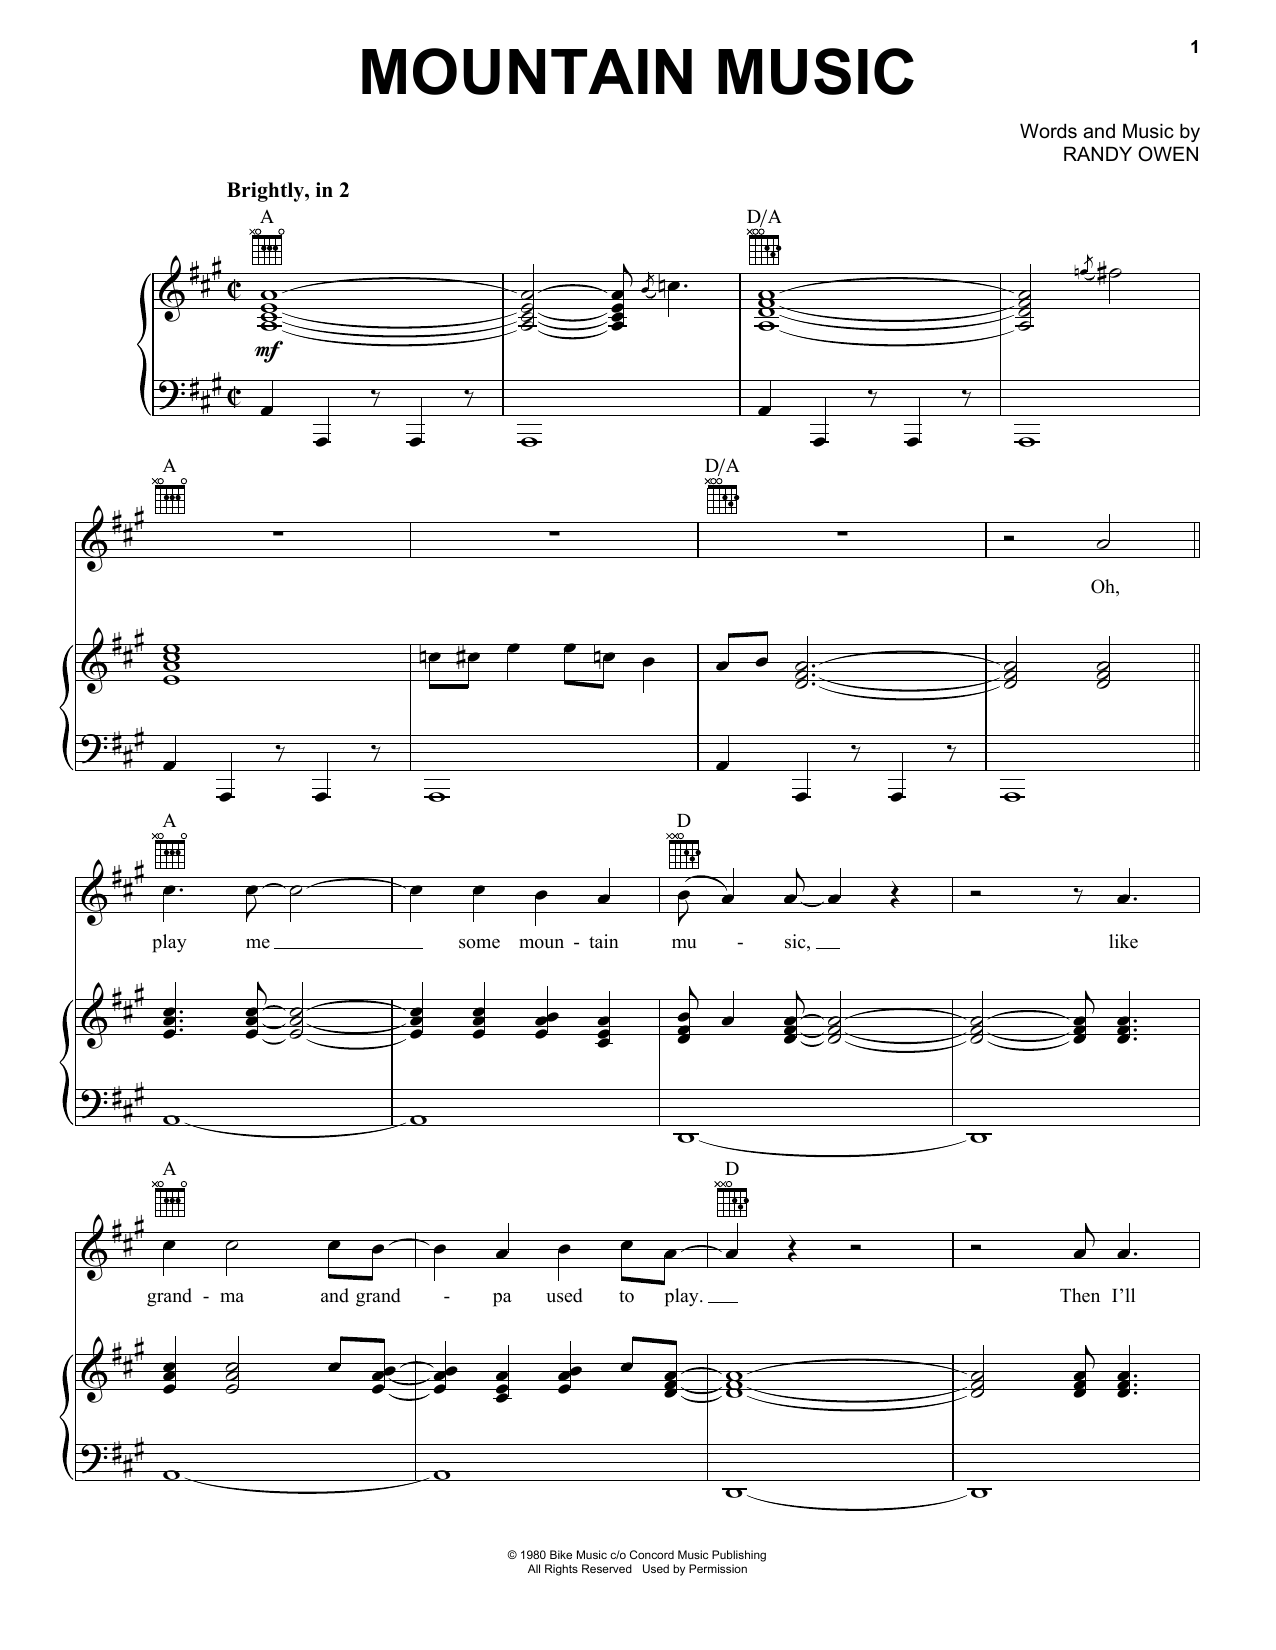 Alabama Mountain Music Sheet Music Notes & Chords for Baritone Ukulele - Download or Print PDF